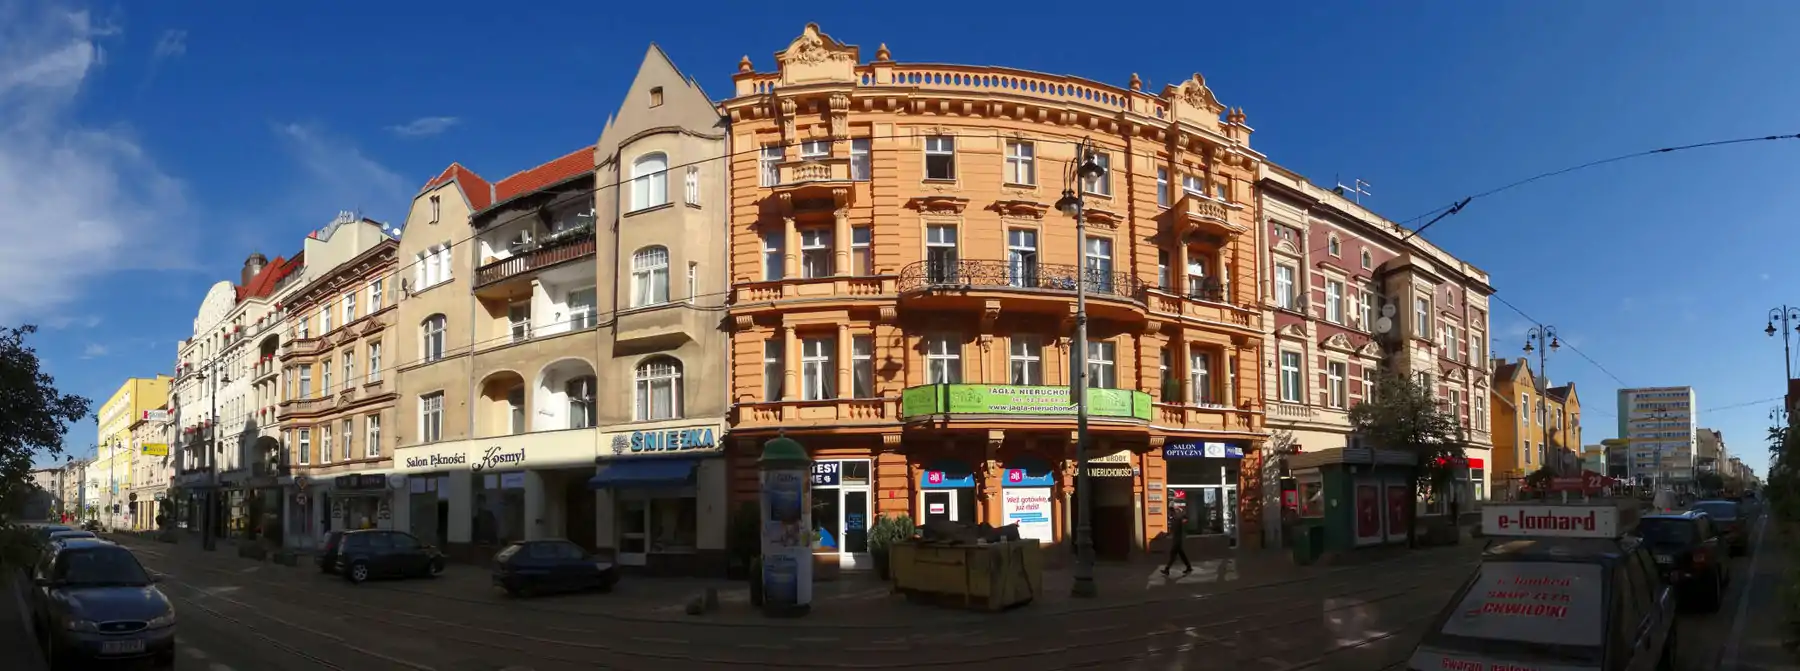 George Sikorski Tenement (left), Tenement at Gdanska street 33 (center), Julius Grey house (right)